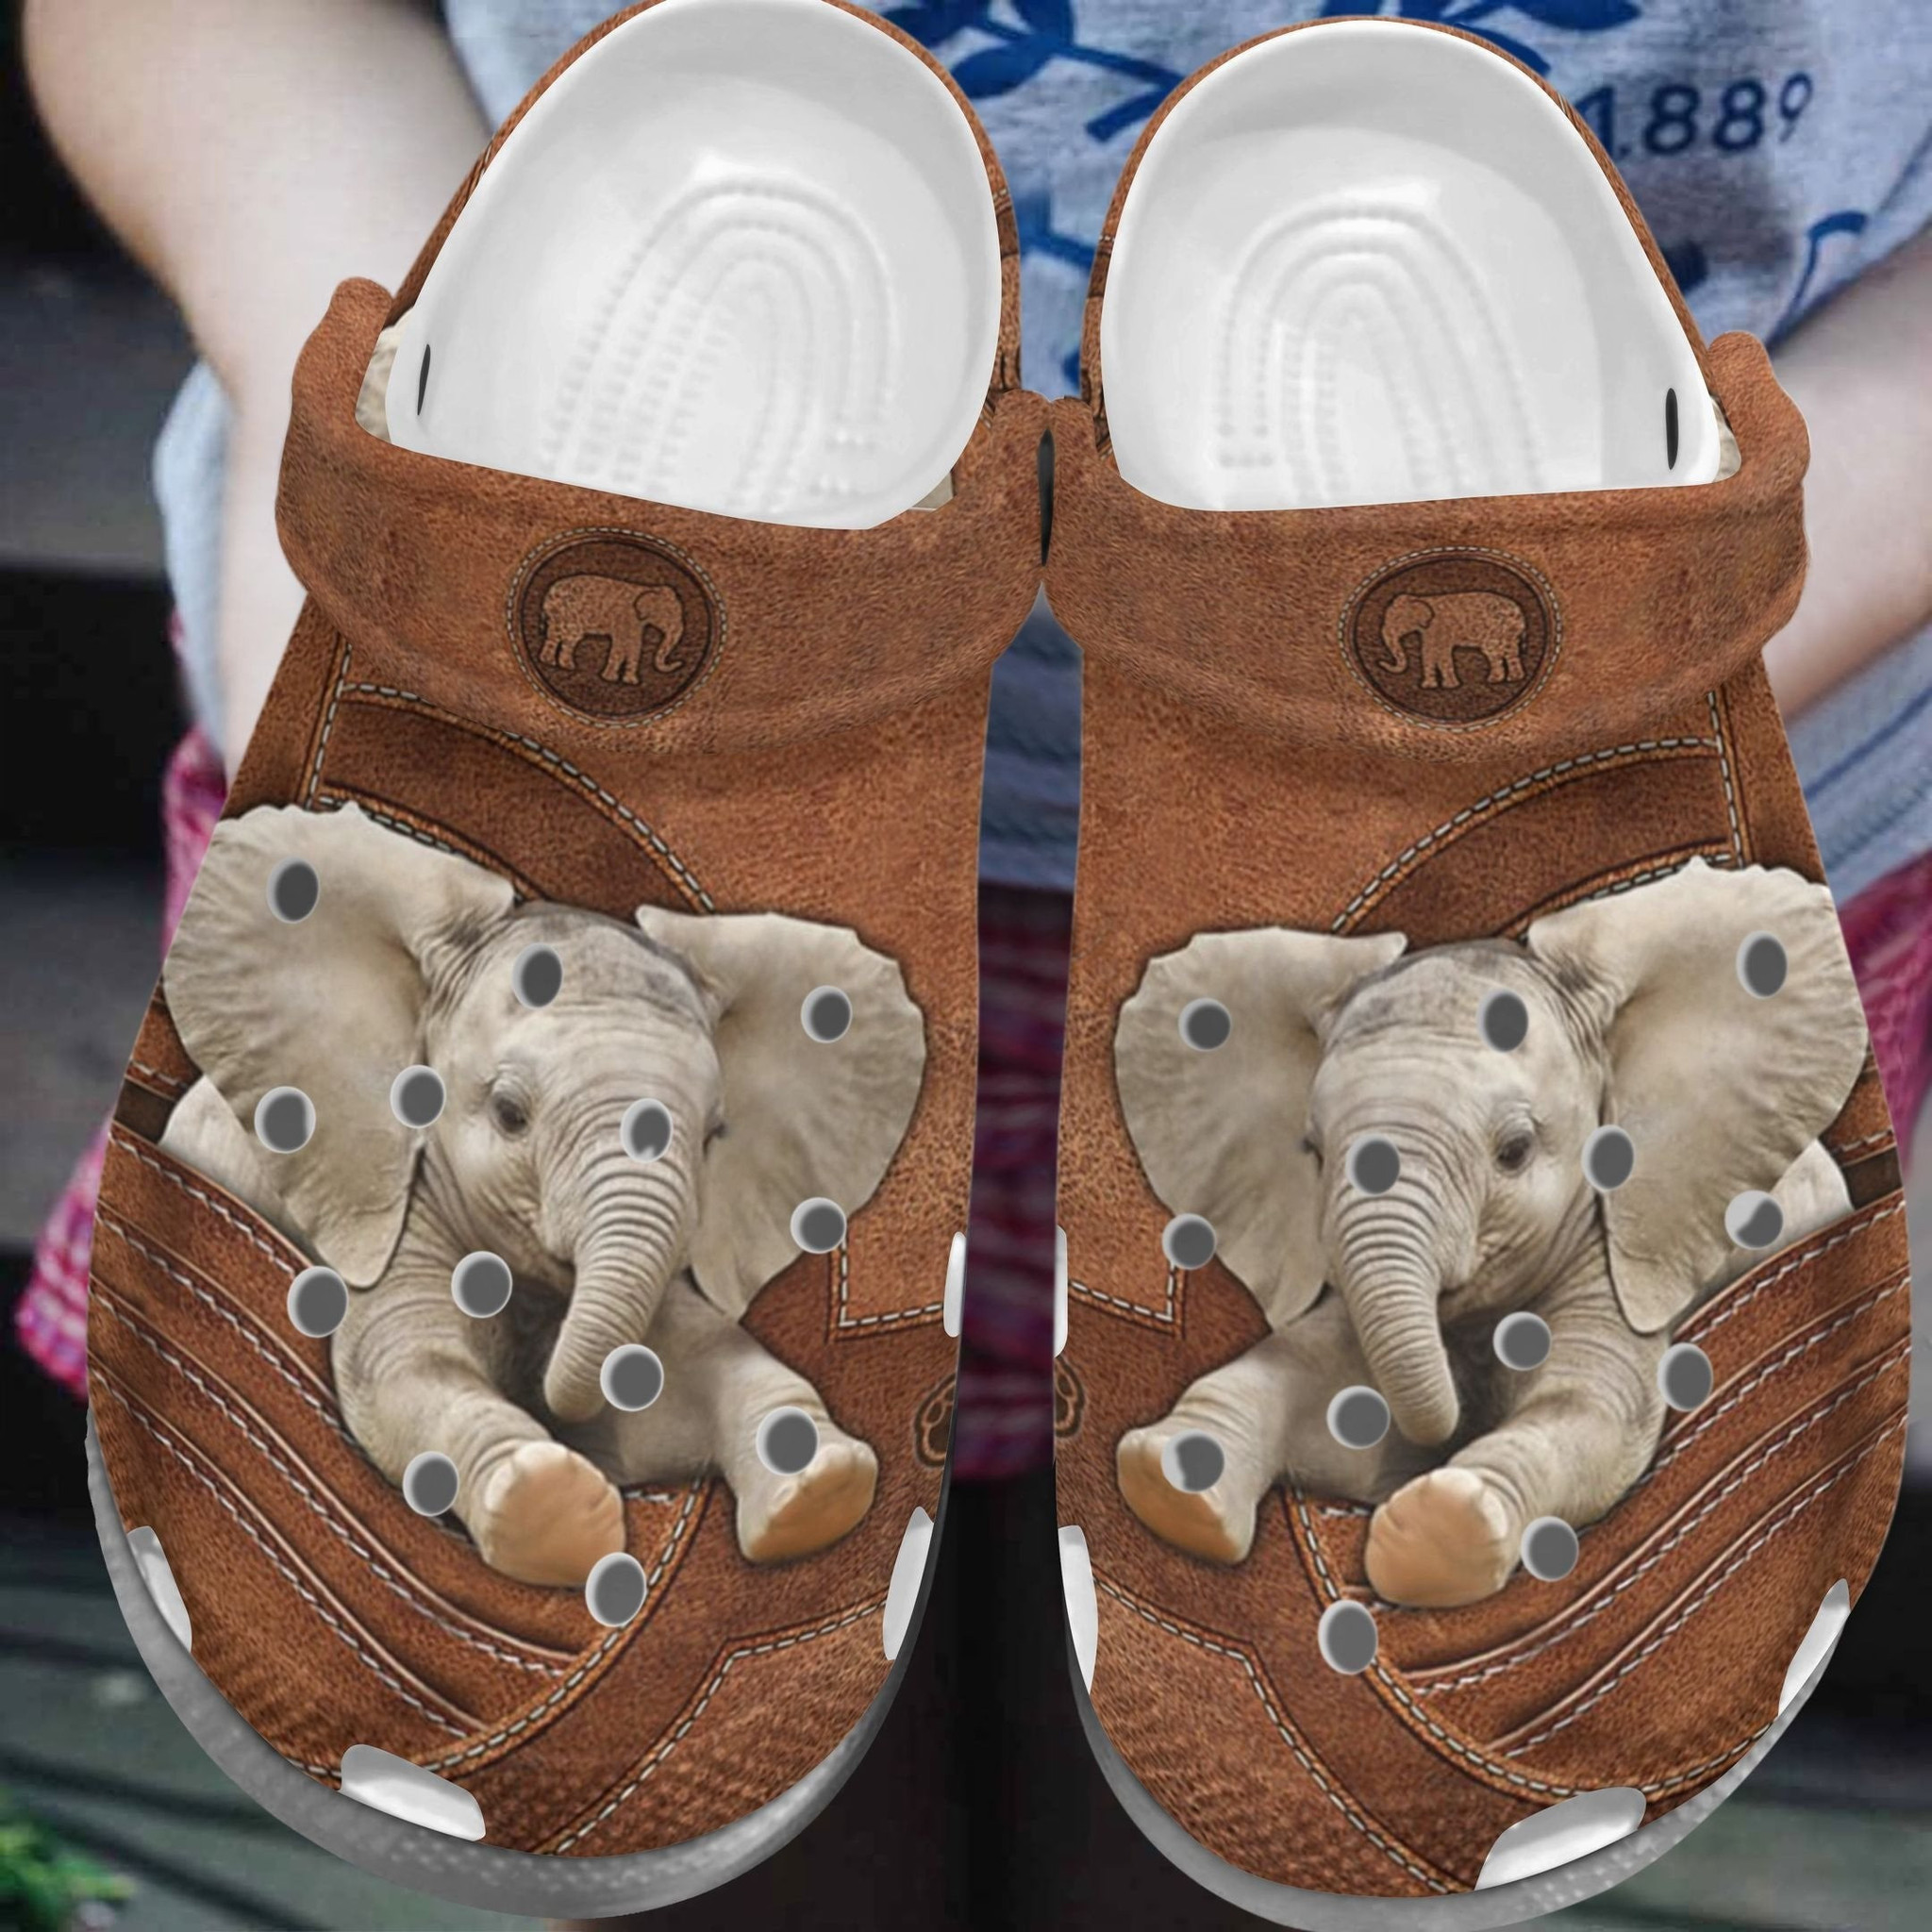 Cute Elephant In Pocket Crocs Shoes Clog - Mini Elephant Crocbland Gift For Men Women